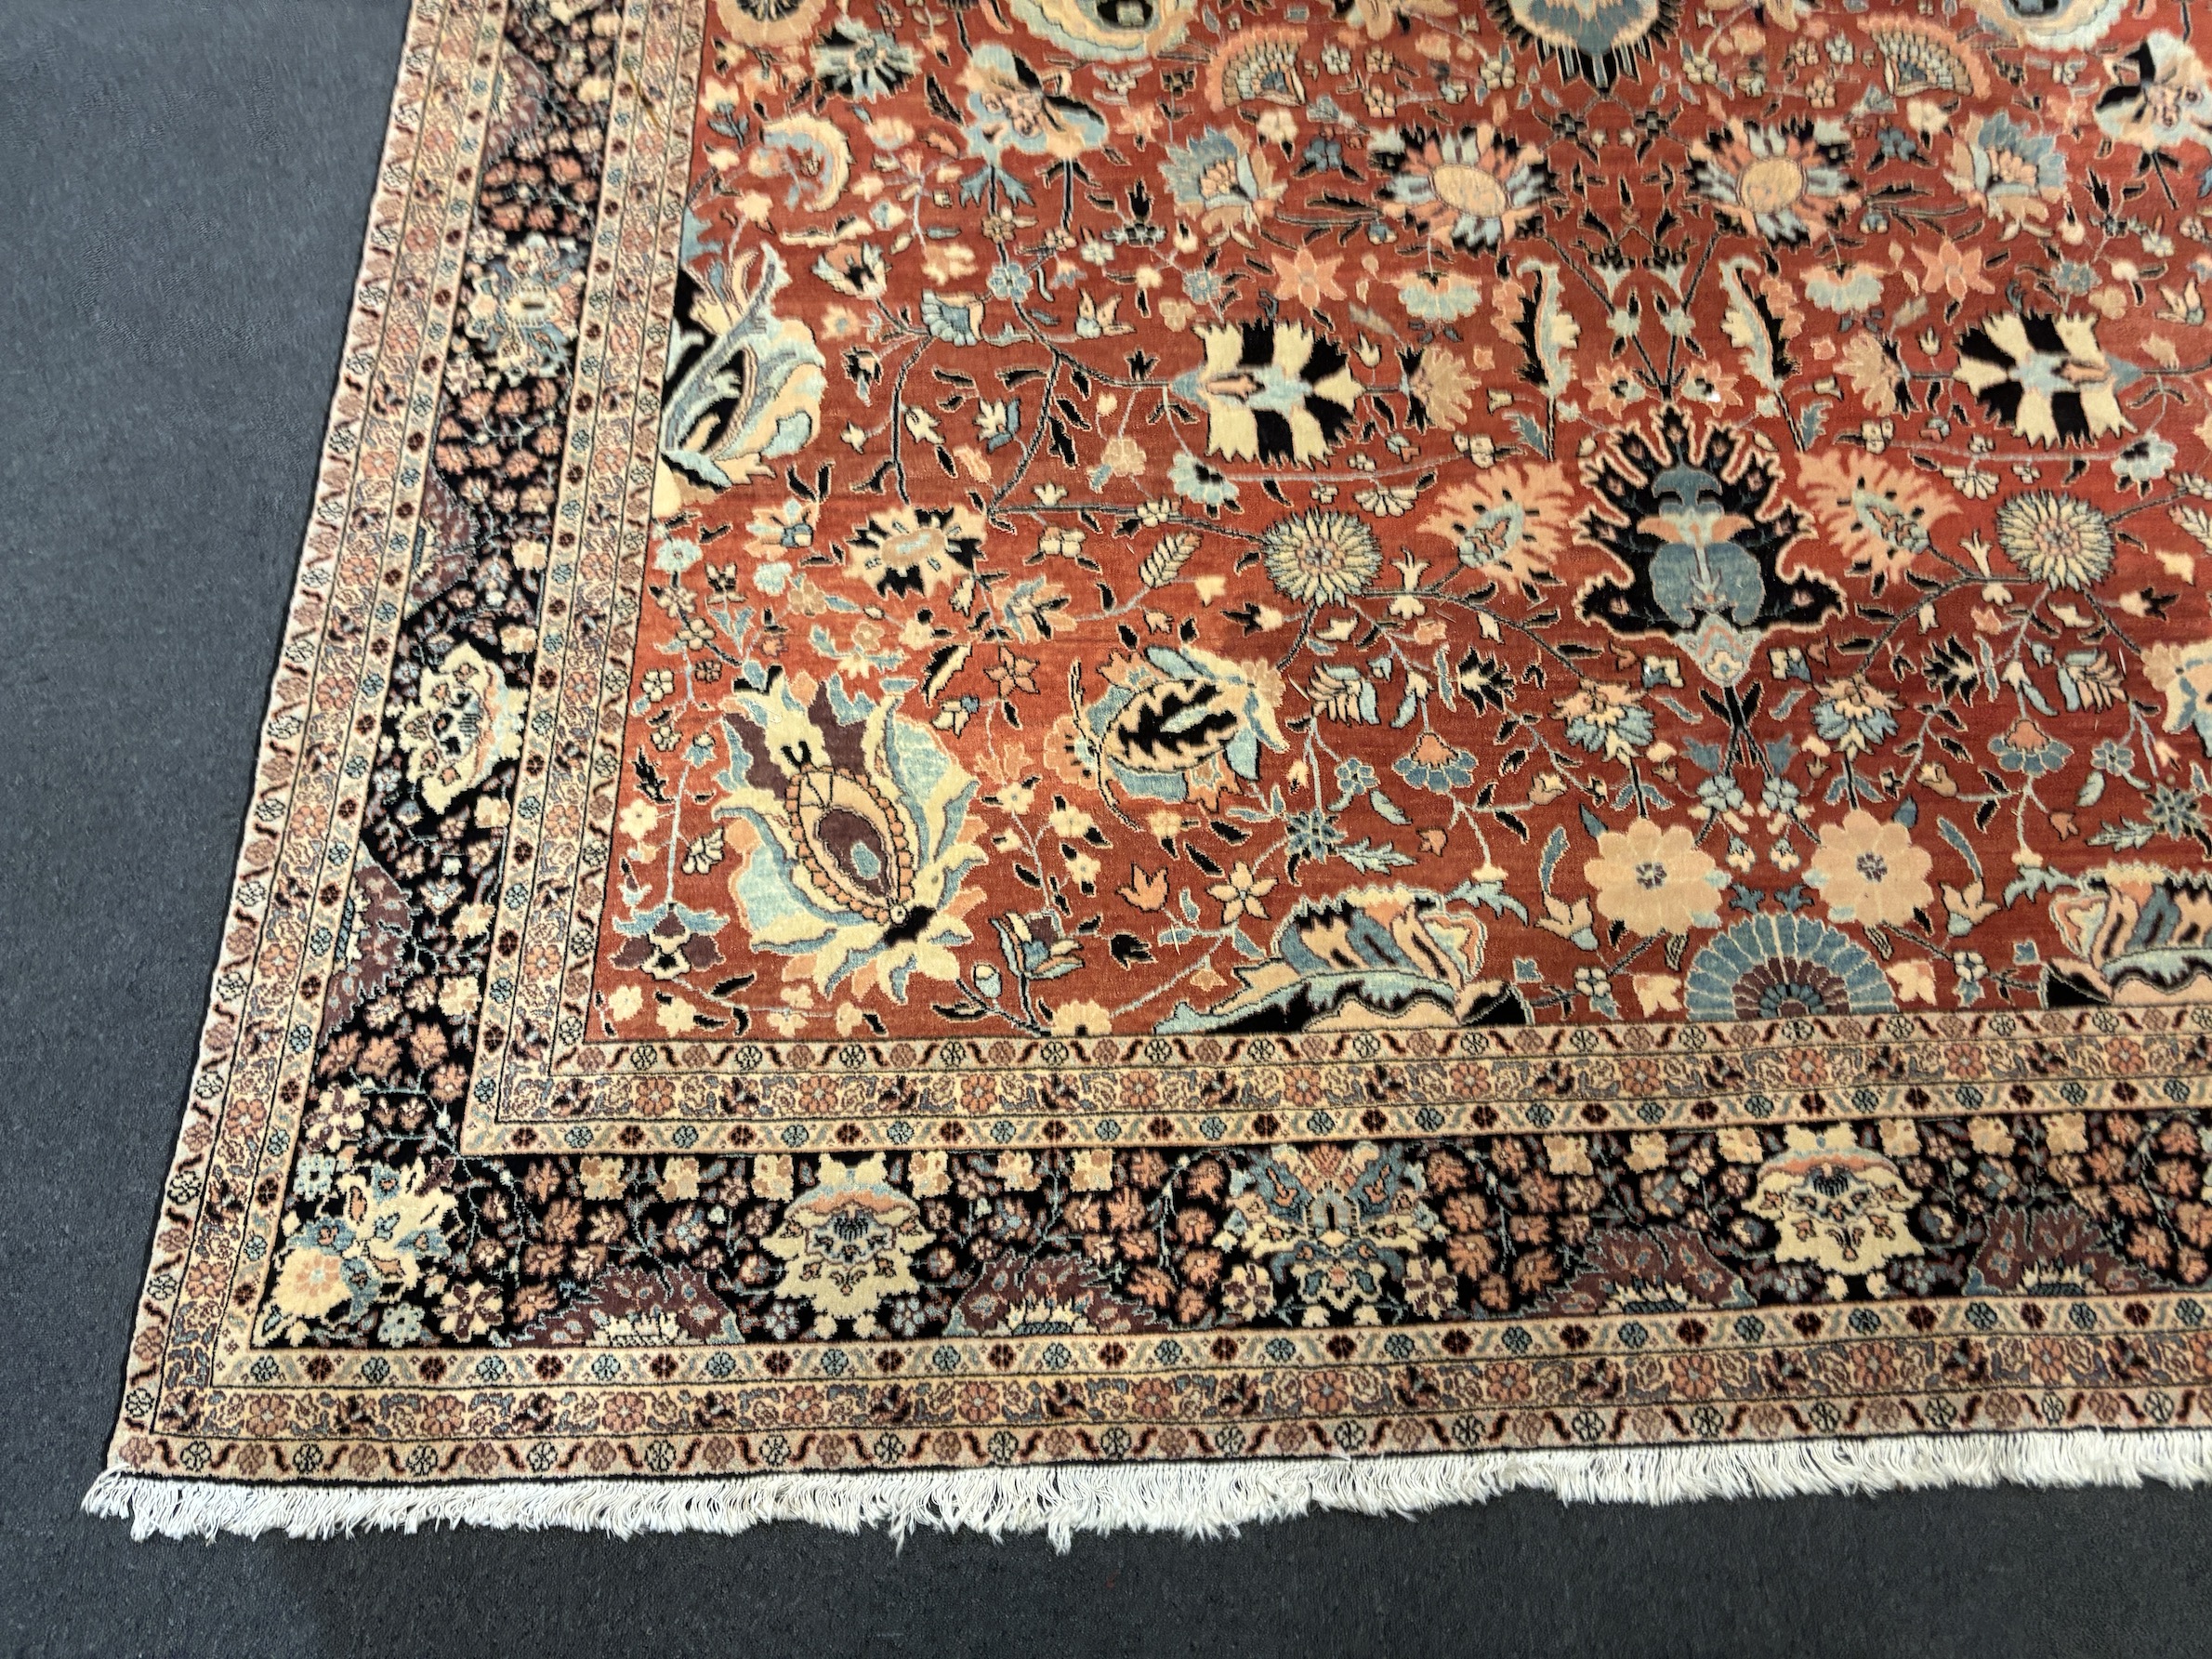 A Tabriz brick red ground gallery carpet 575 x 300cm